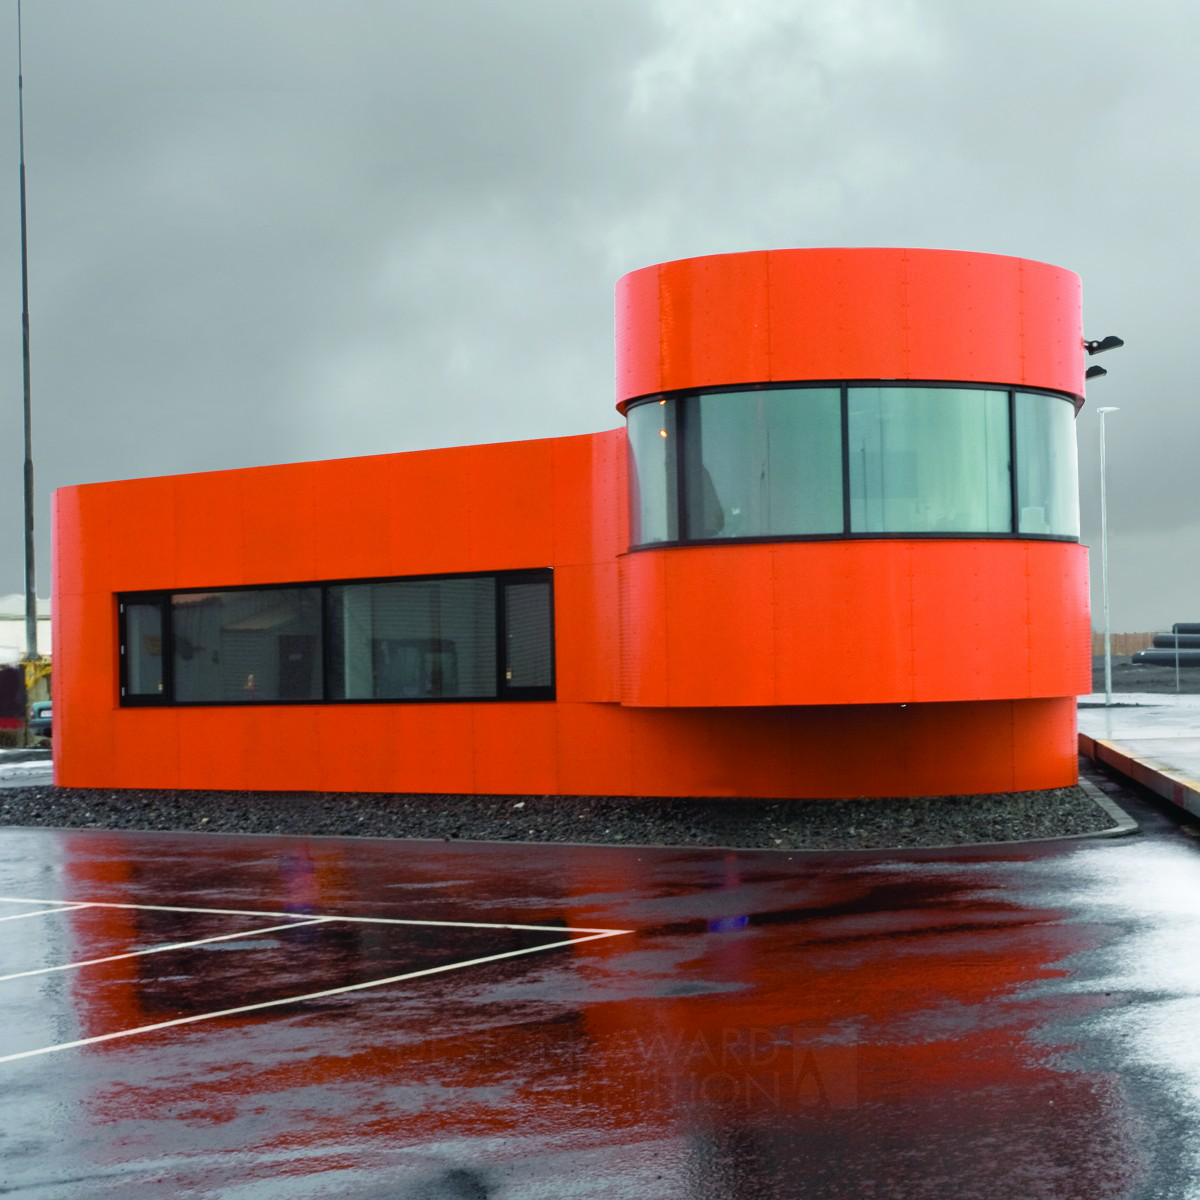 Port Station For weighting fish by Yrki arkitektar